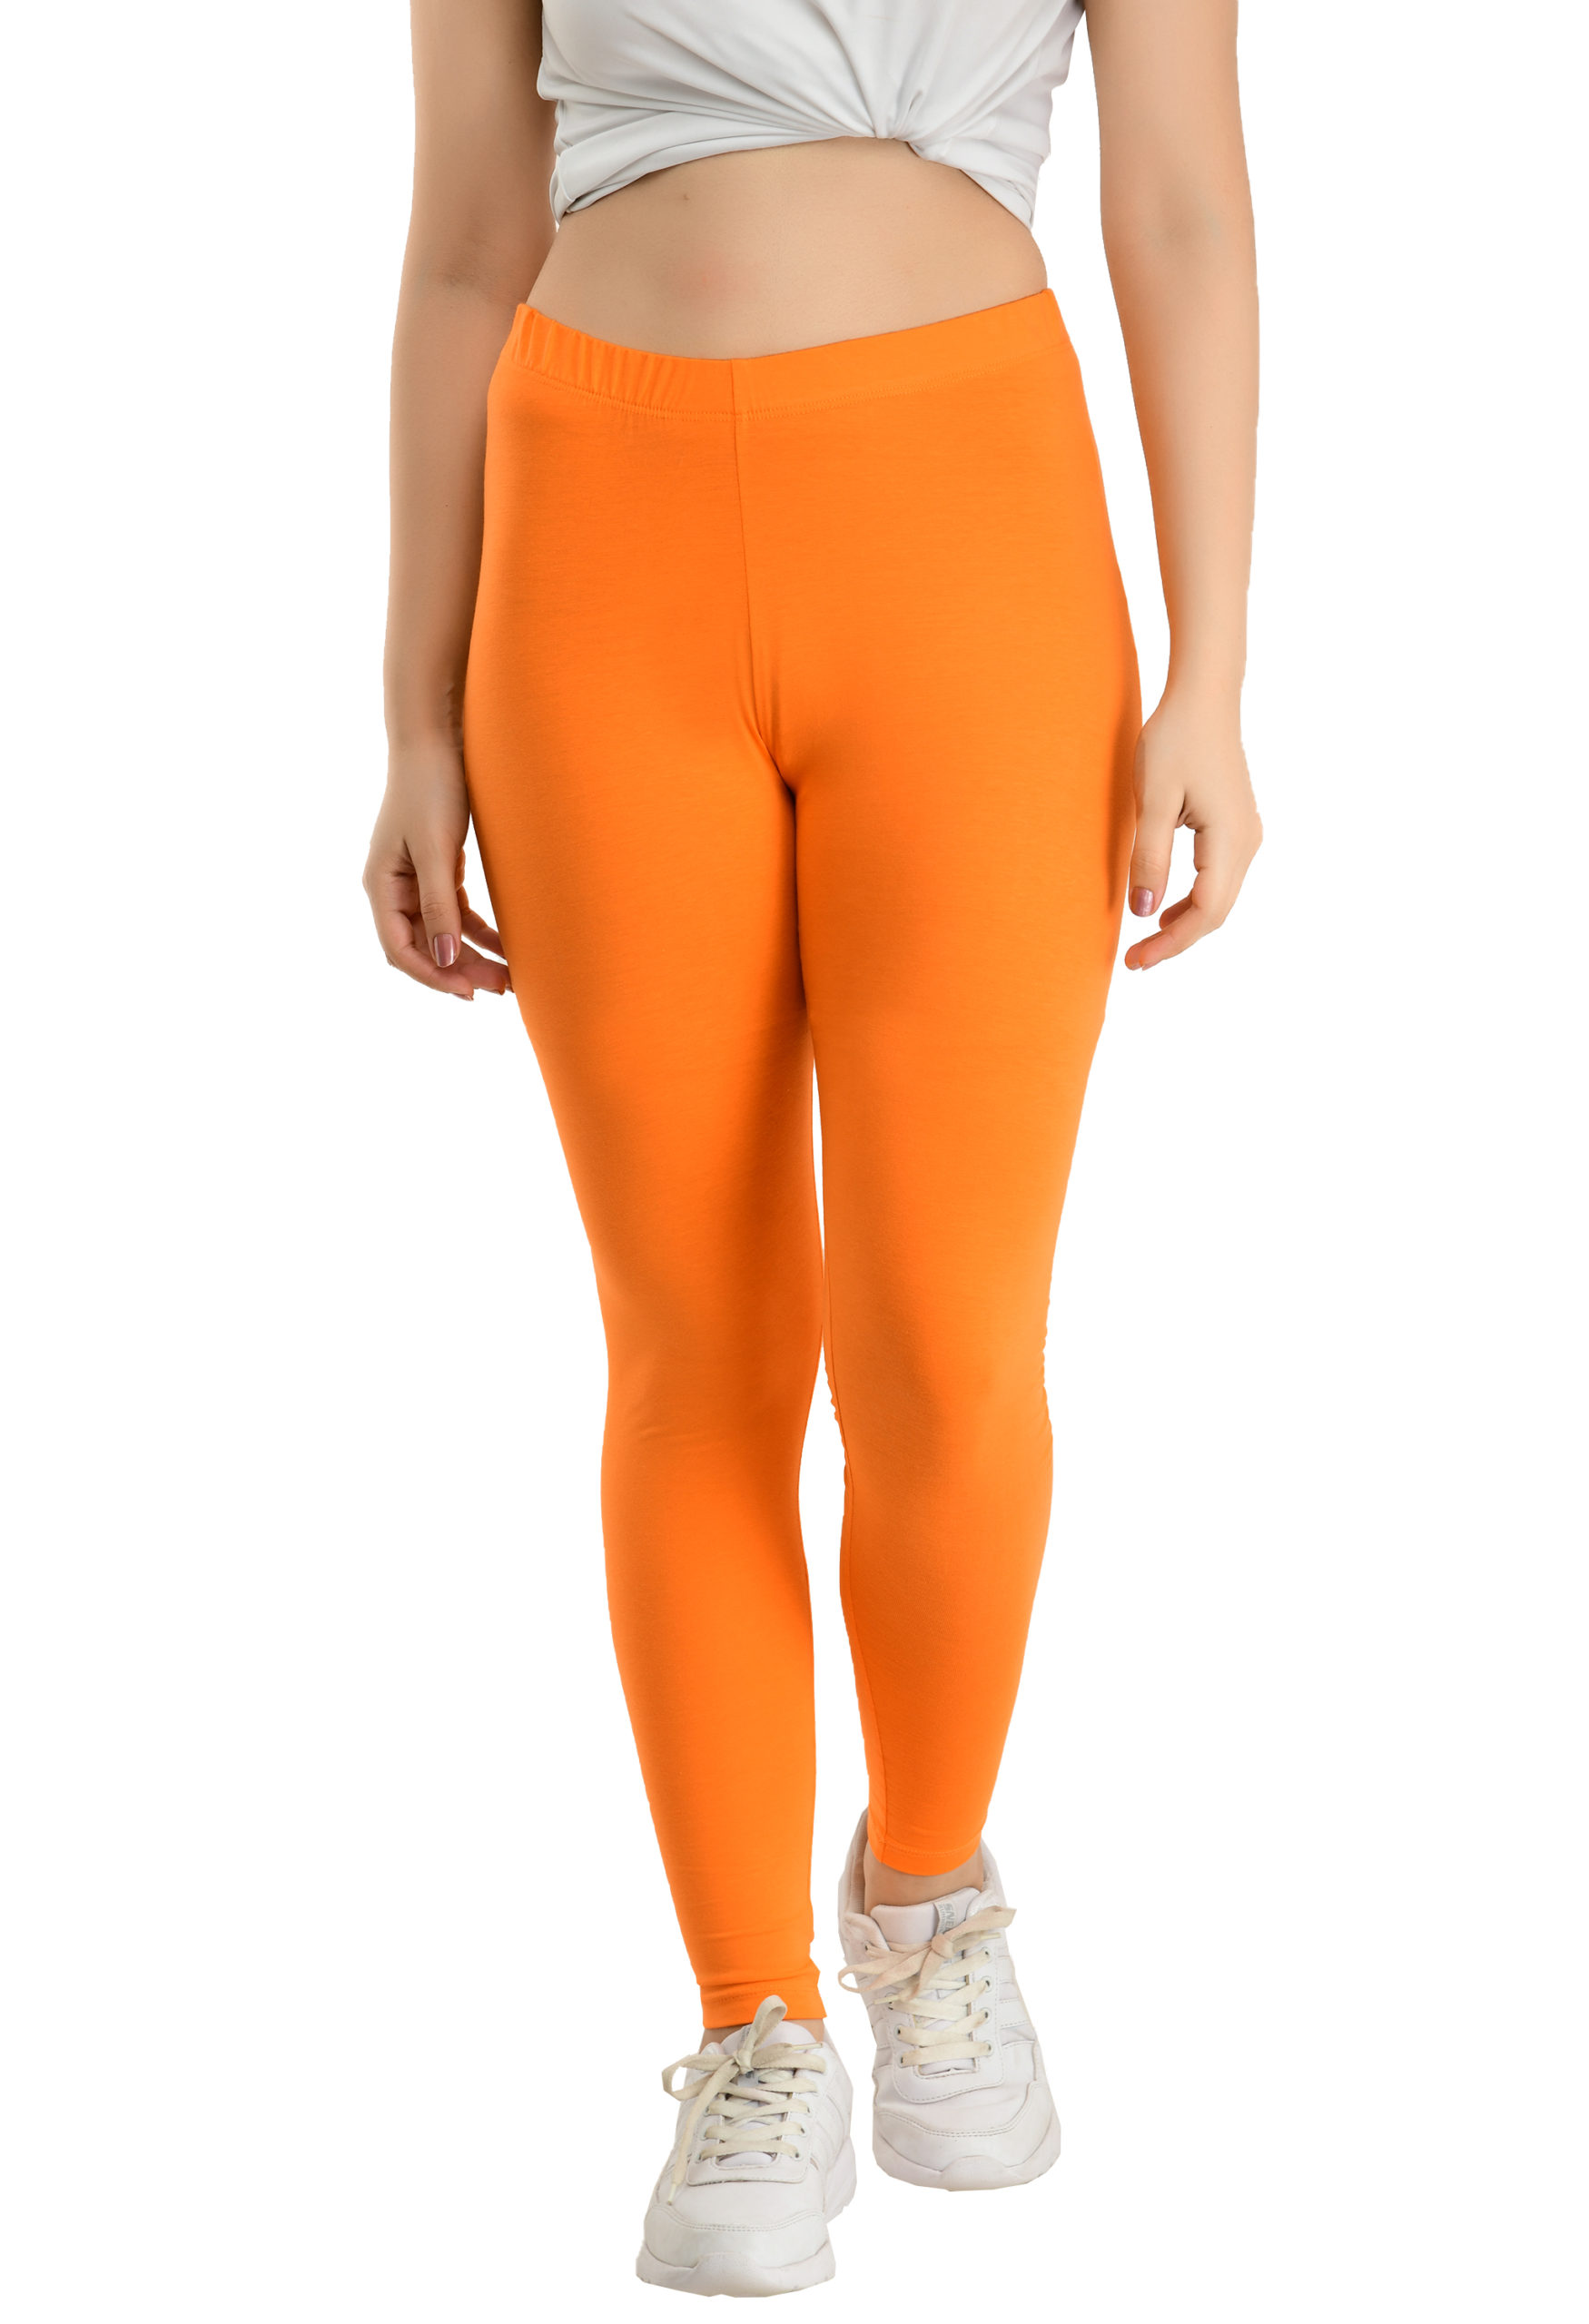 Buy MANTU Women's Cotton Lycra Ankle Length Leggings Orange. at Amazon.in